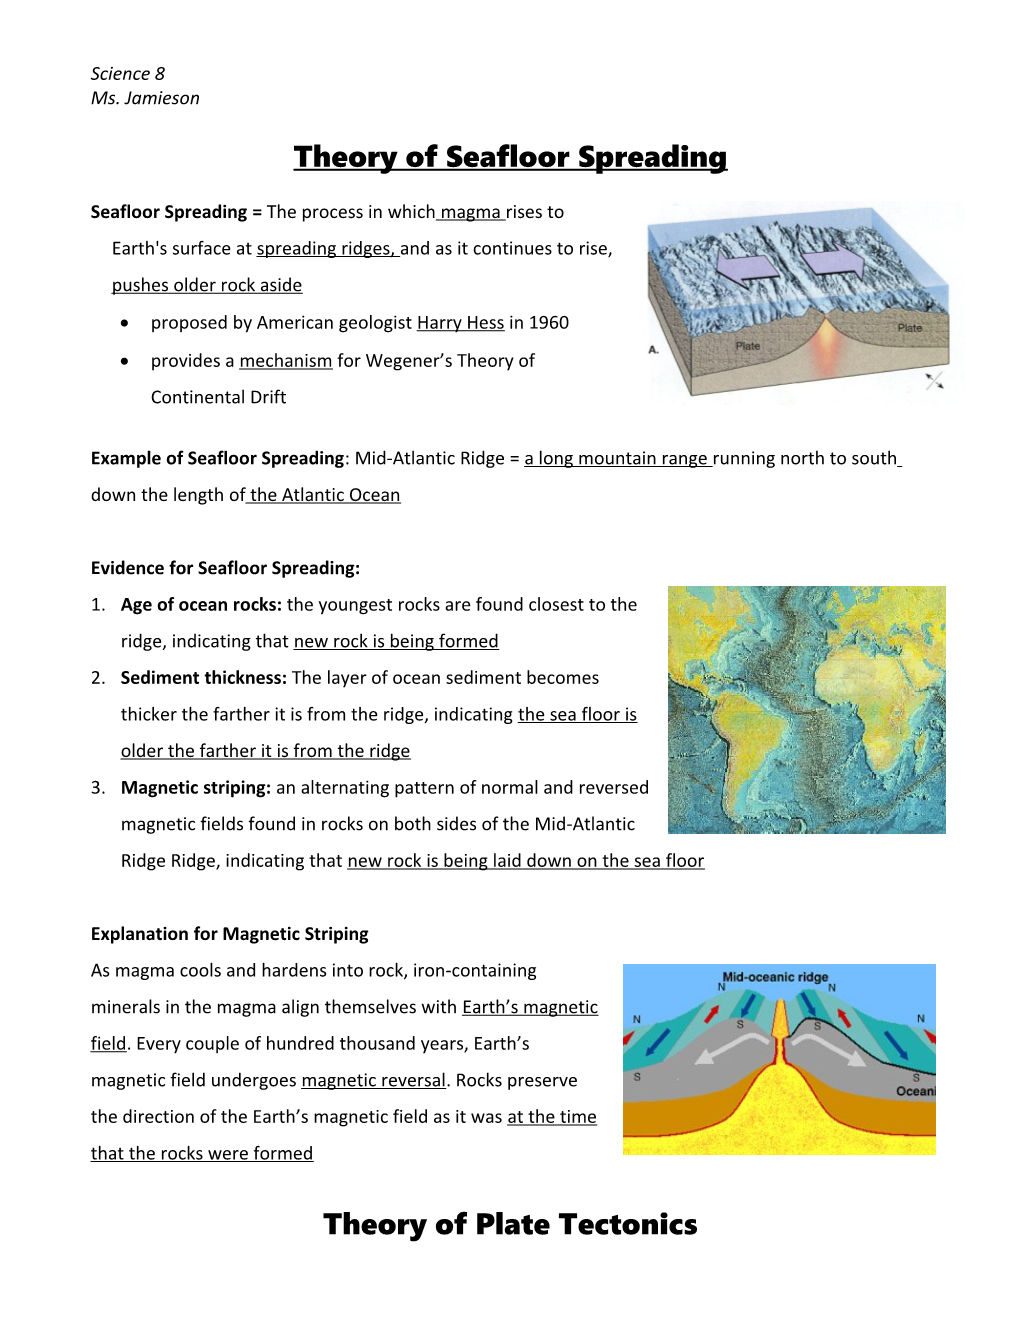 Theory of Seafloor Spreading